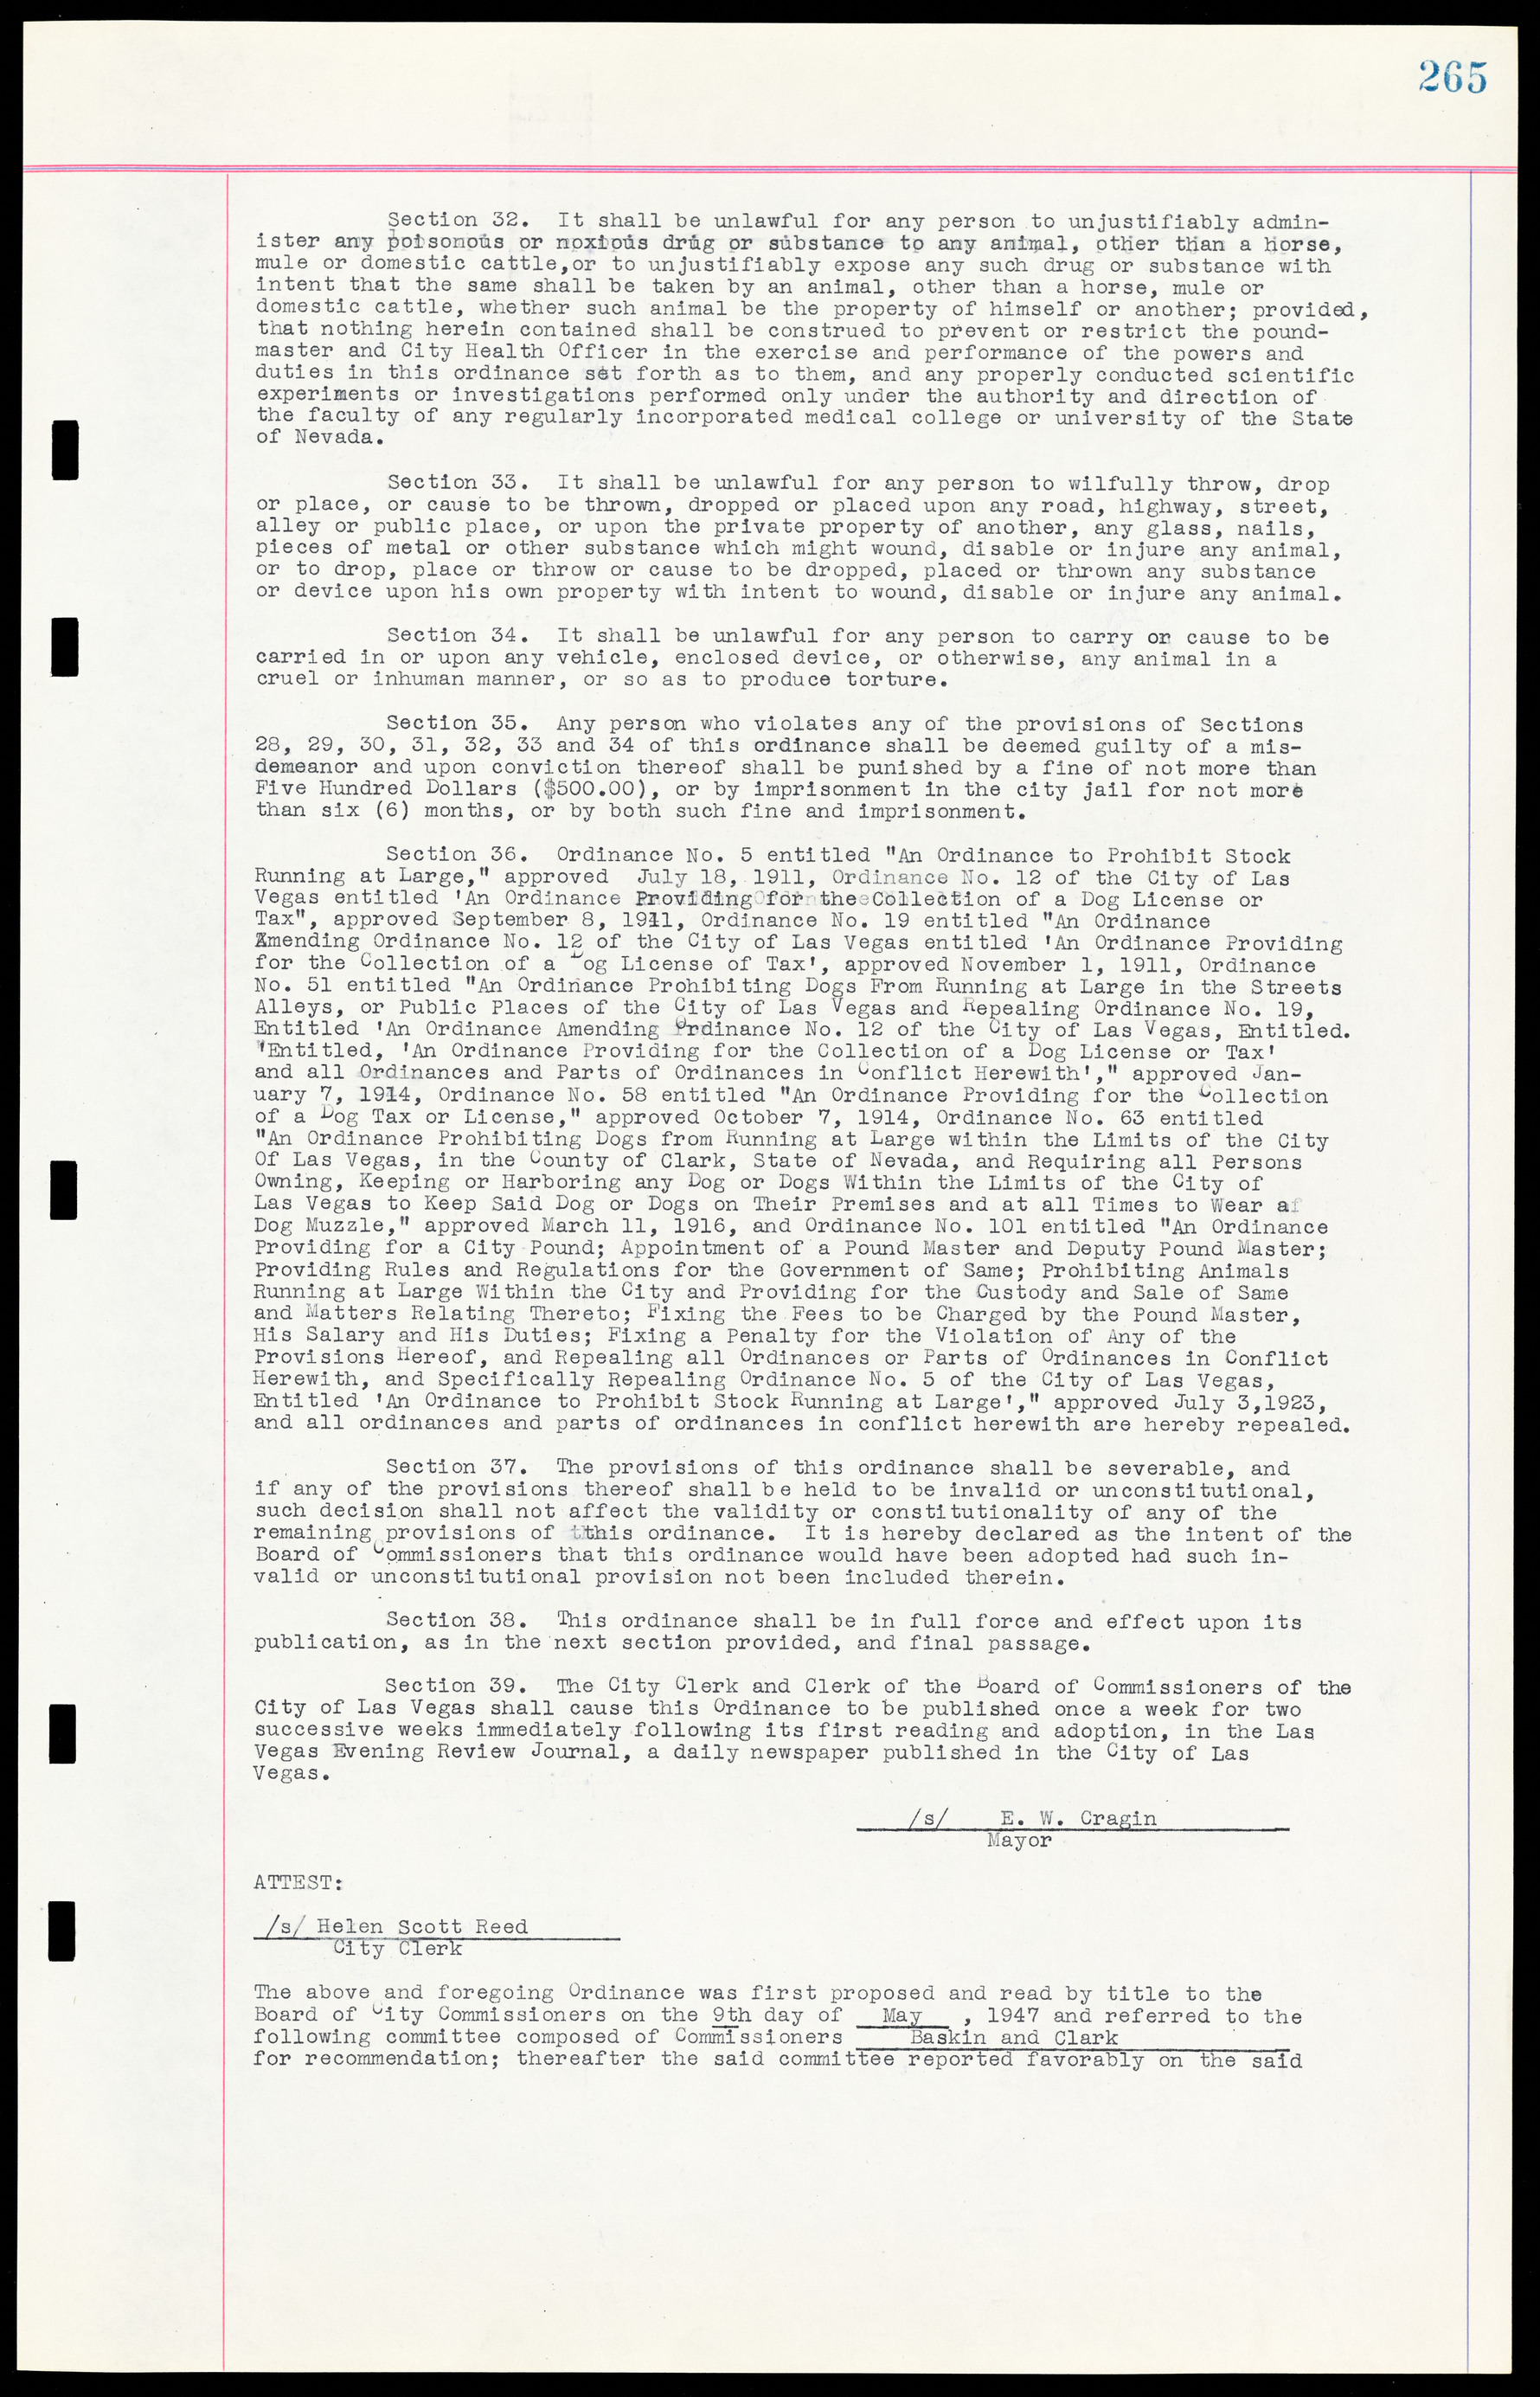 Las Vegas City Ordinances, March 31, 1933 to October 25, 1950, lvc000014-294